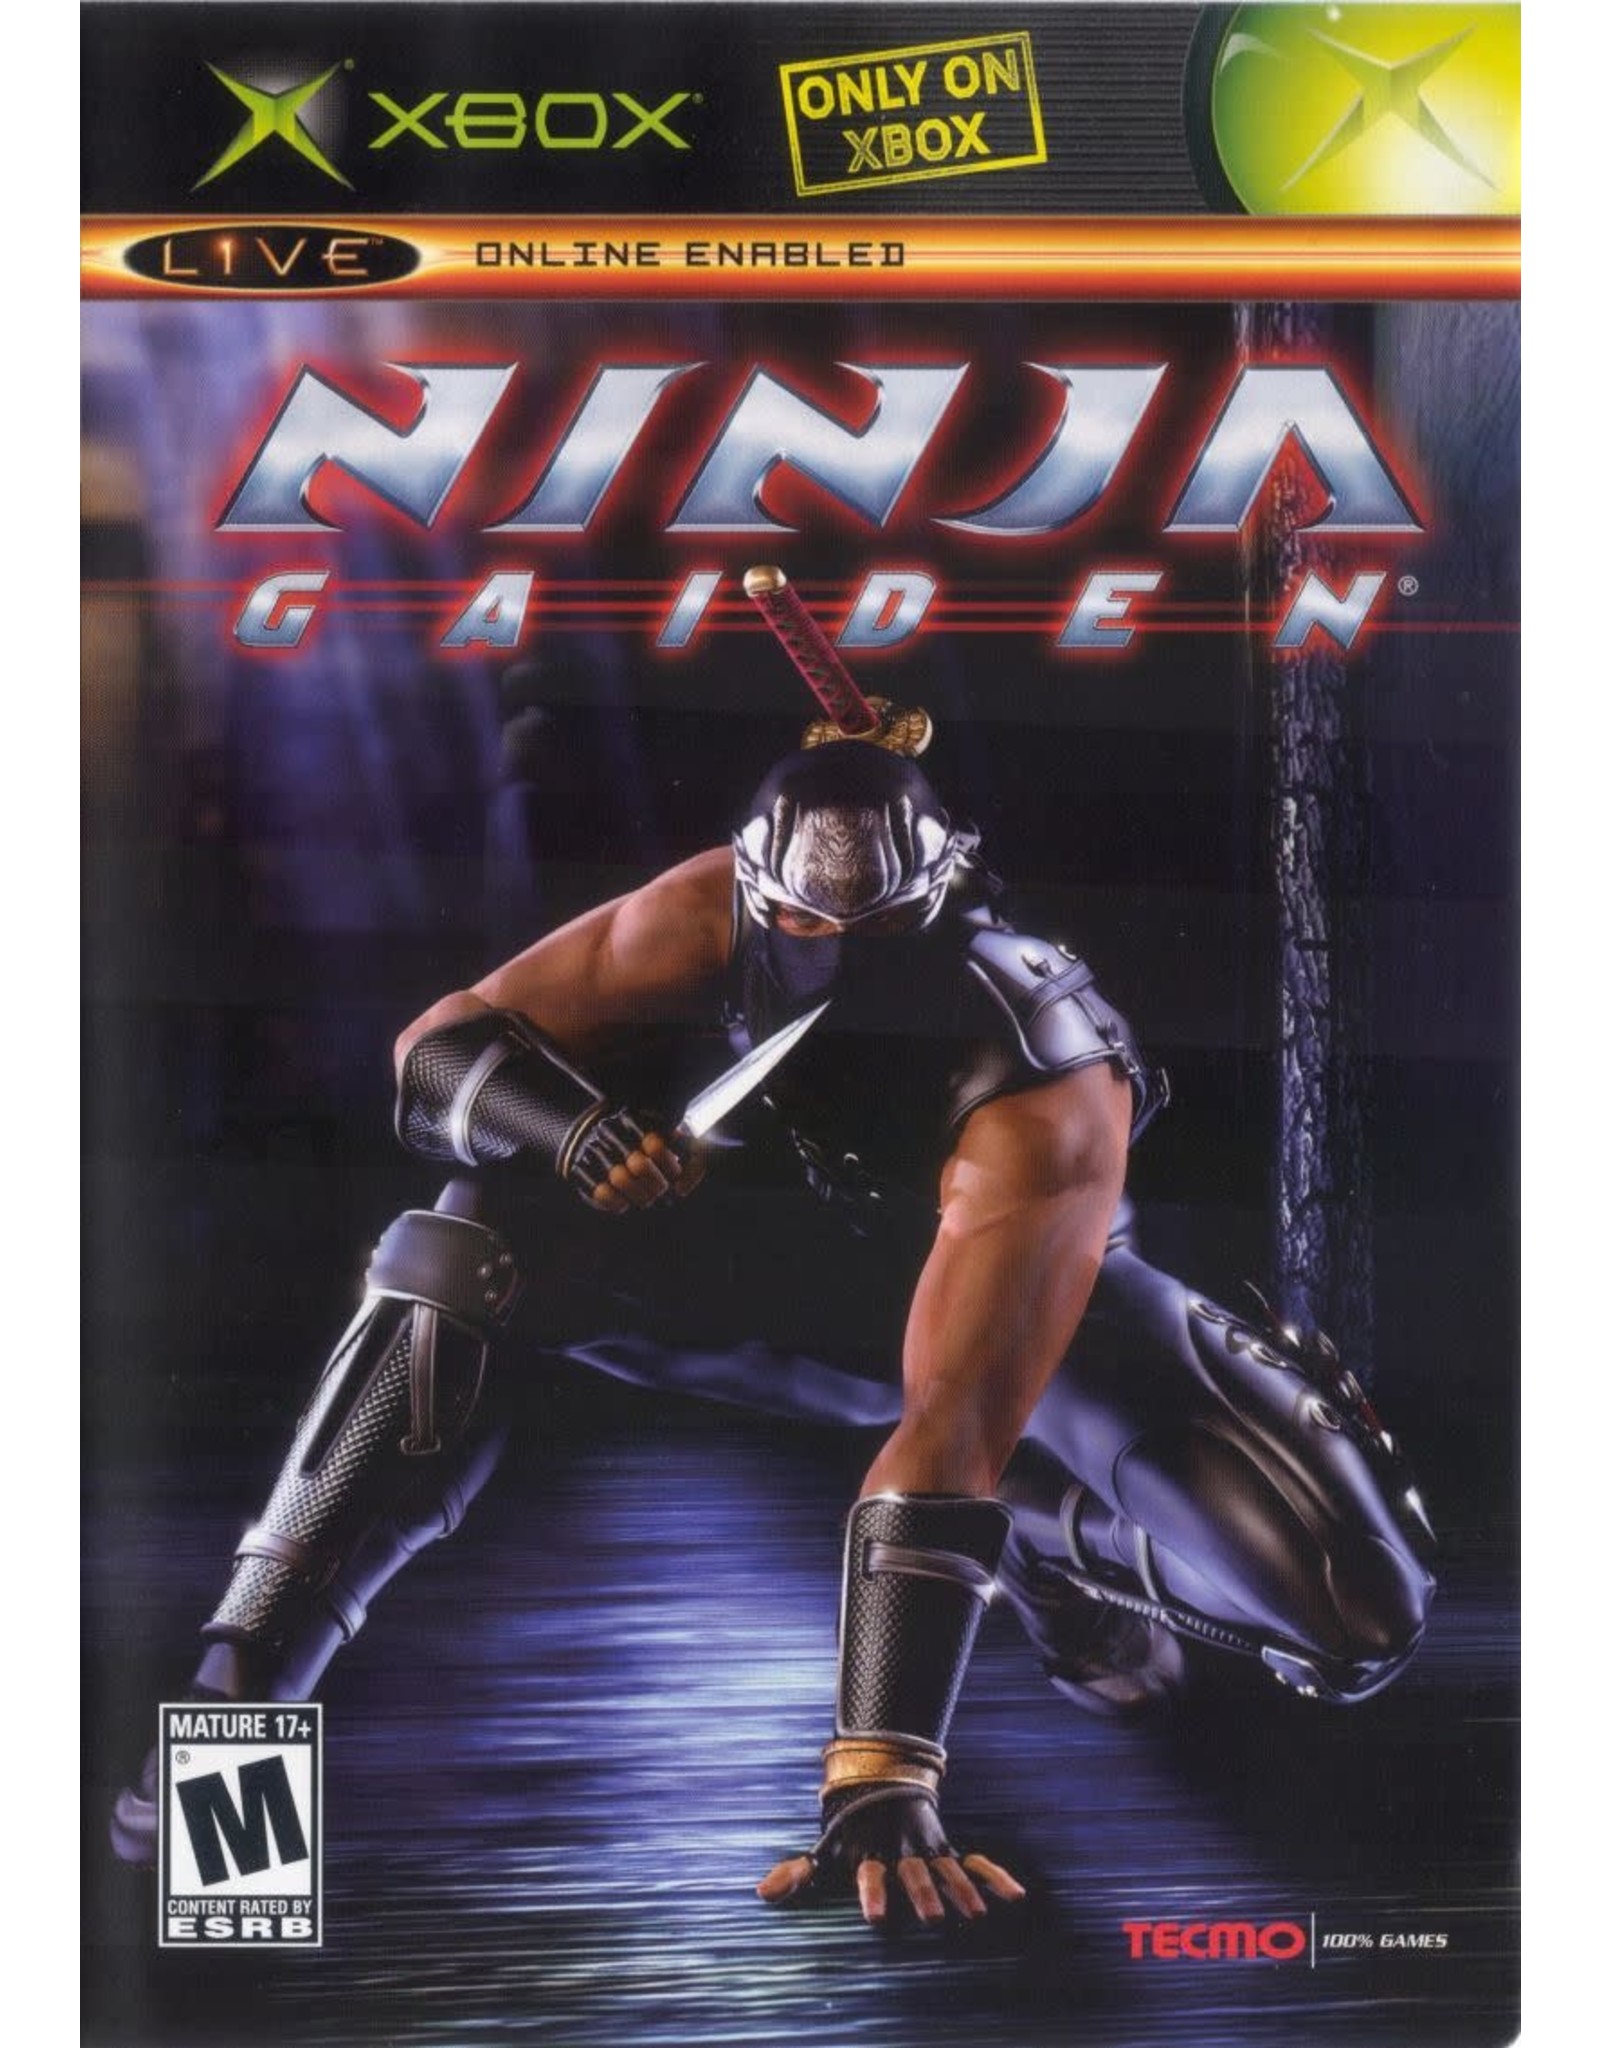 Xbox Ninja Gaiden (No Manual)